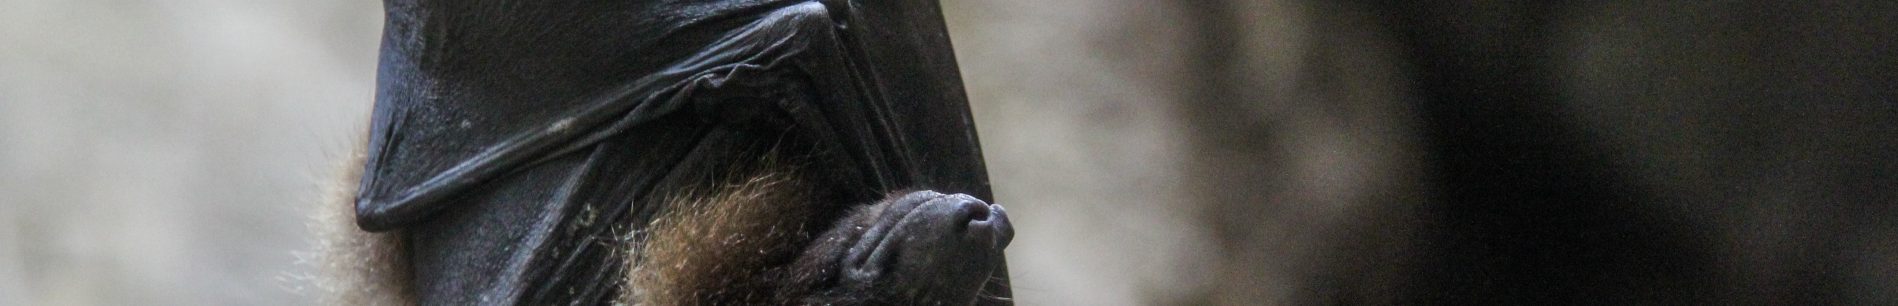 closeup-shot-of-sleeping-bat-wrapped-in-its-wings-min